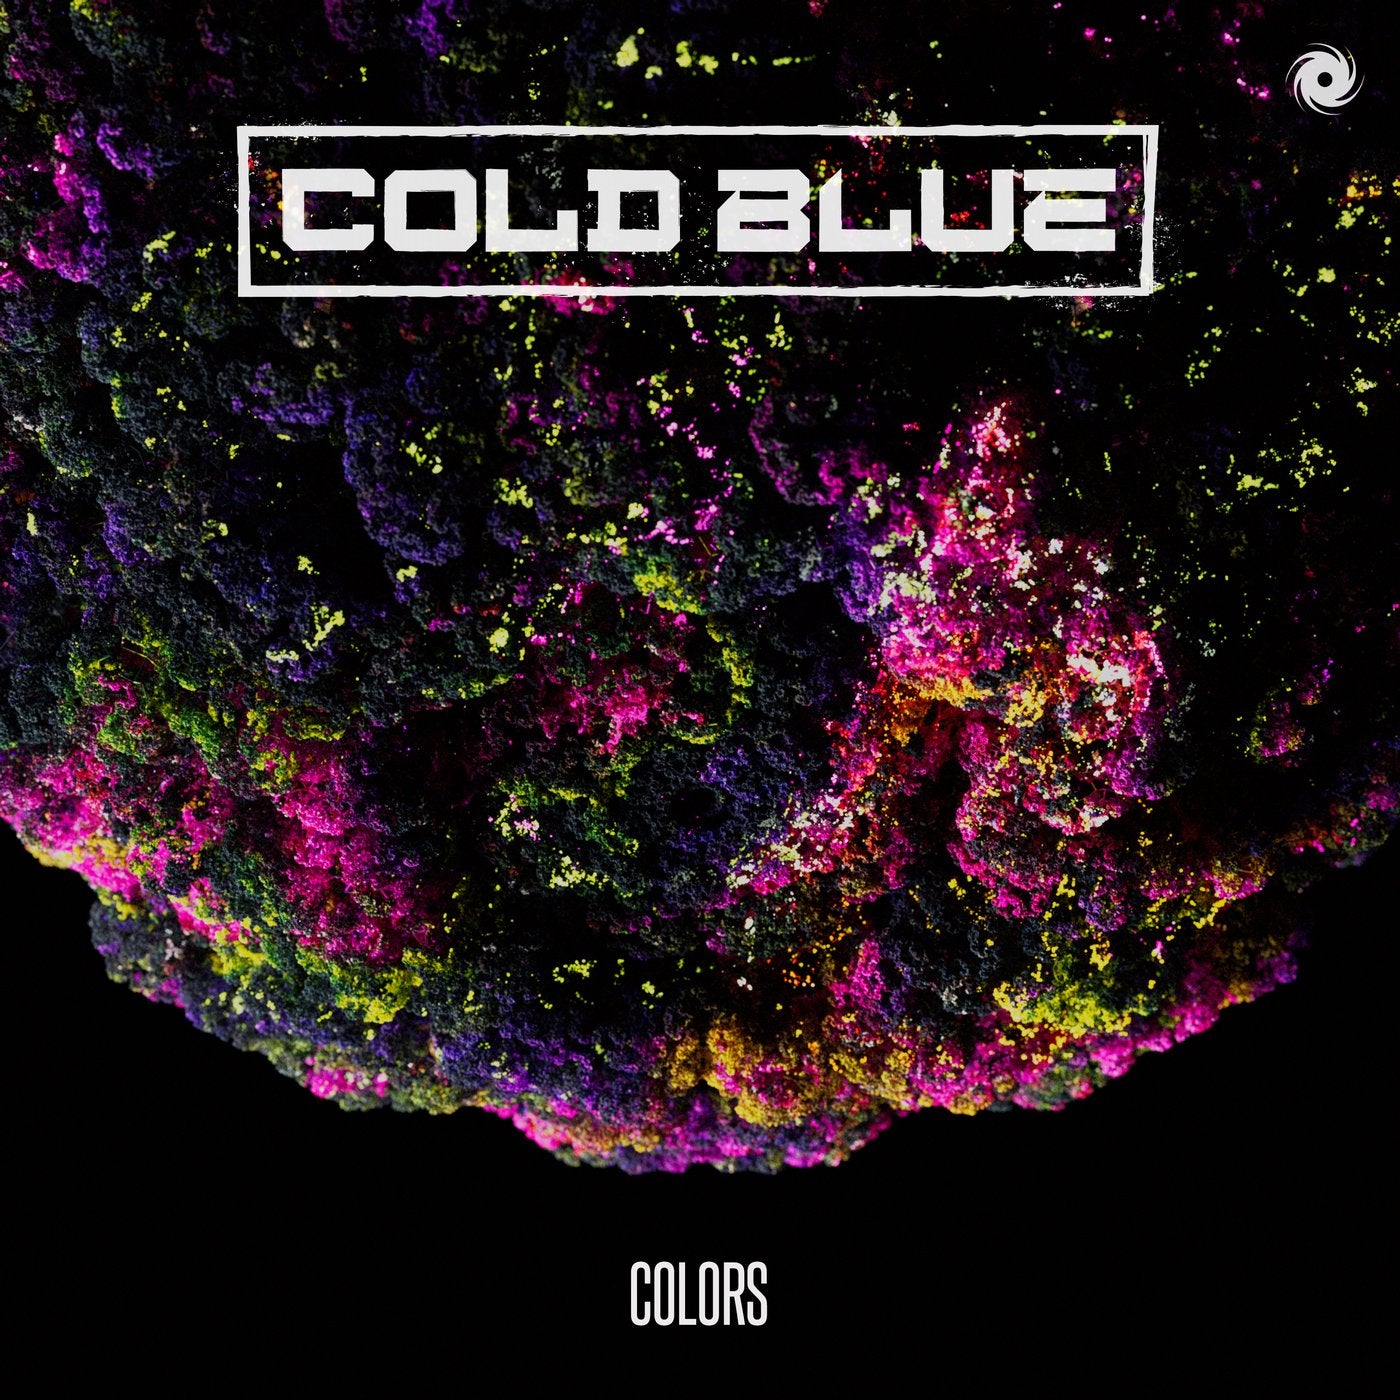 Cold colors. Cold Blue. Cold Blue - Black Rock. Cold Blue биография.